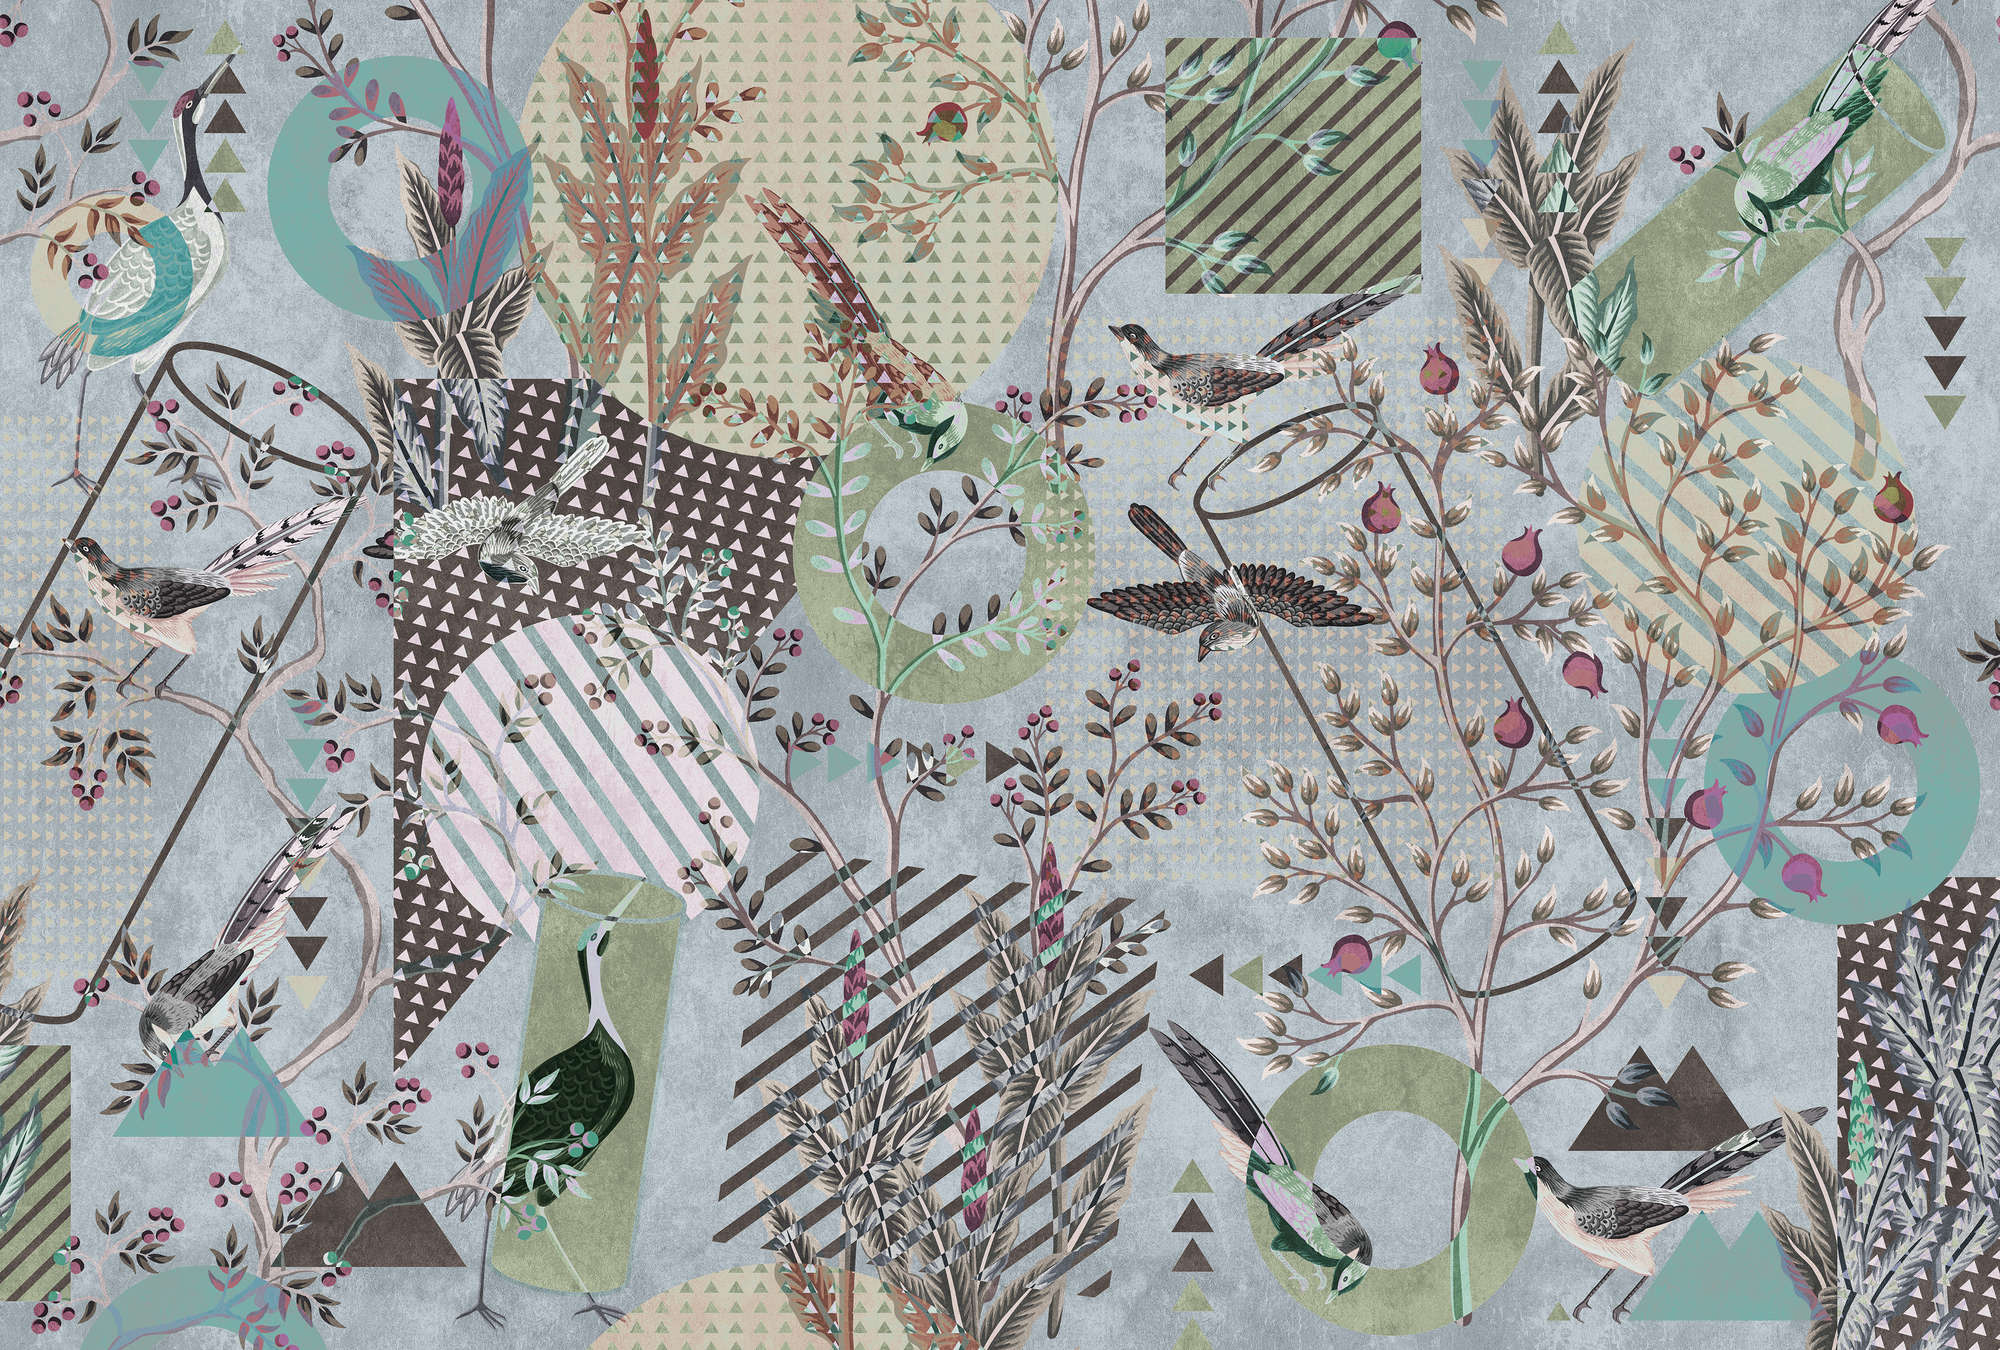             Birds Playground 2 - Vogels Behang Collage & Patroon Mix
        